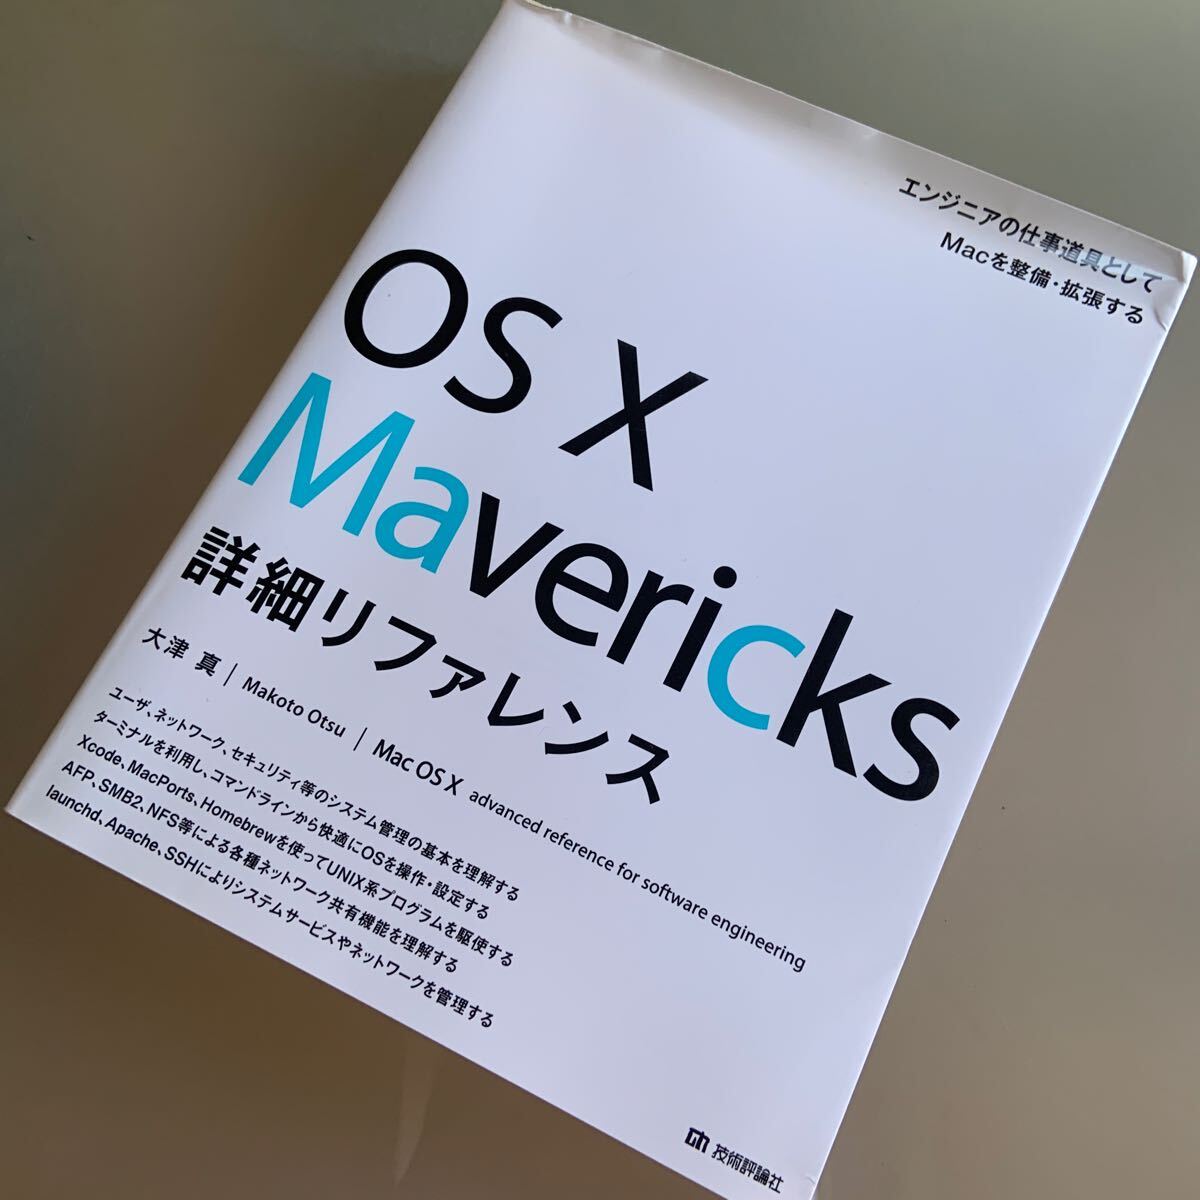 OS X Mavericks details reference large Tsu genuine 